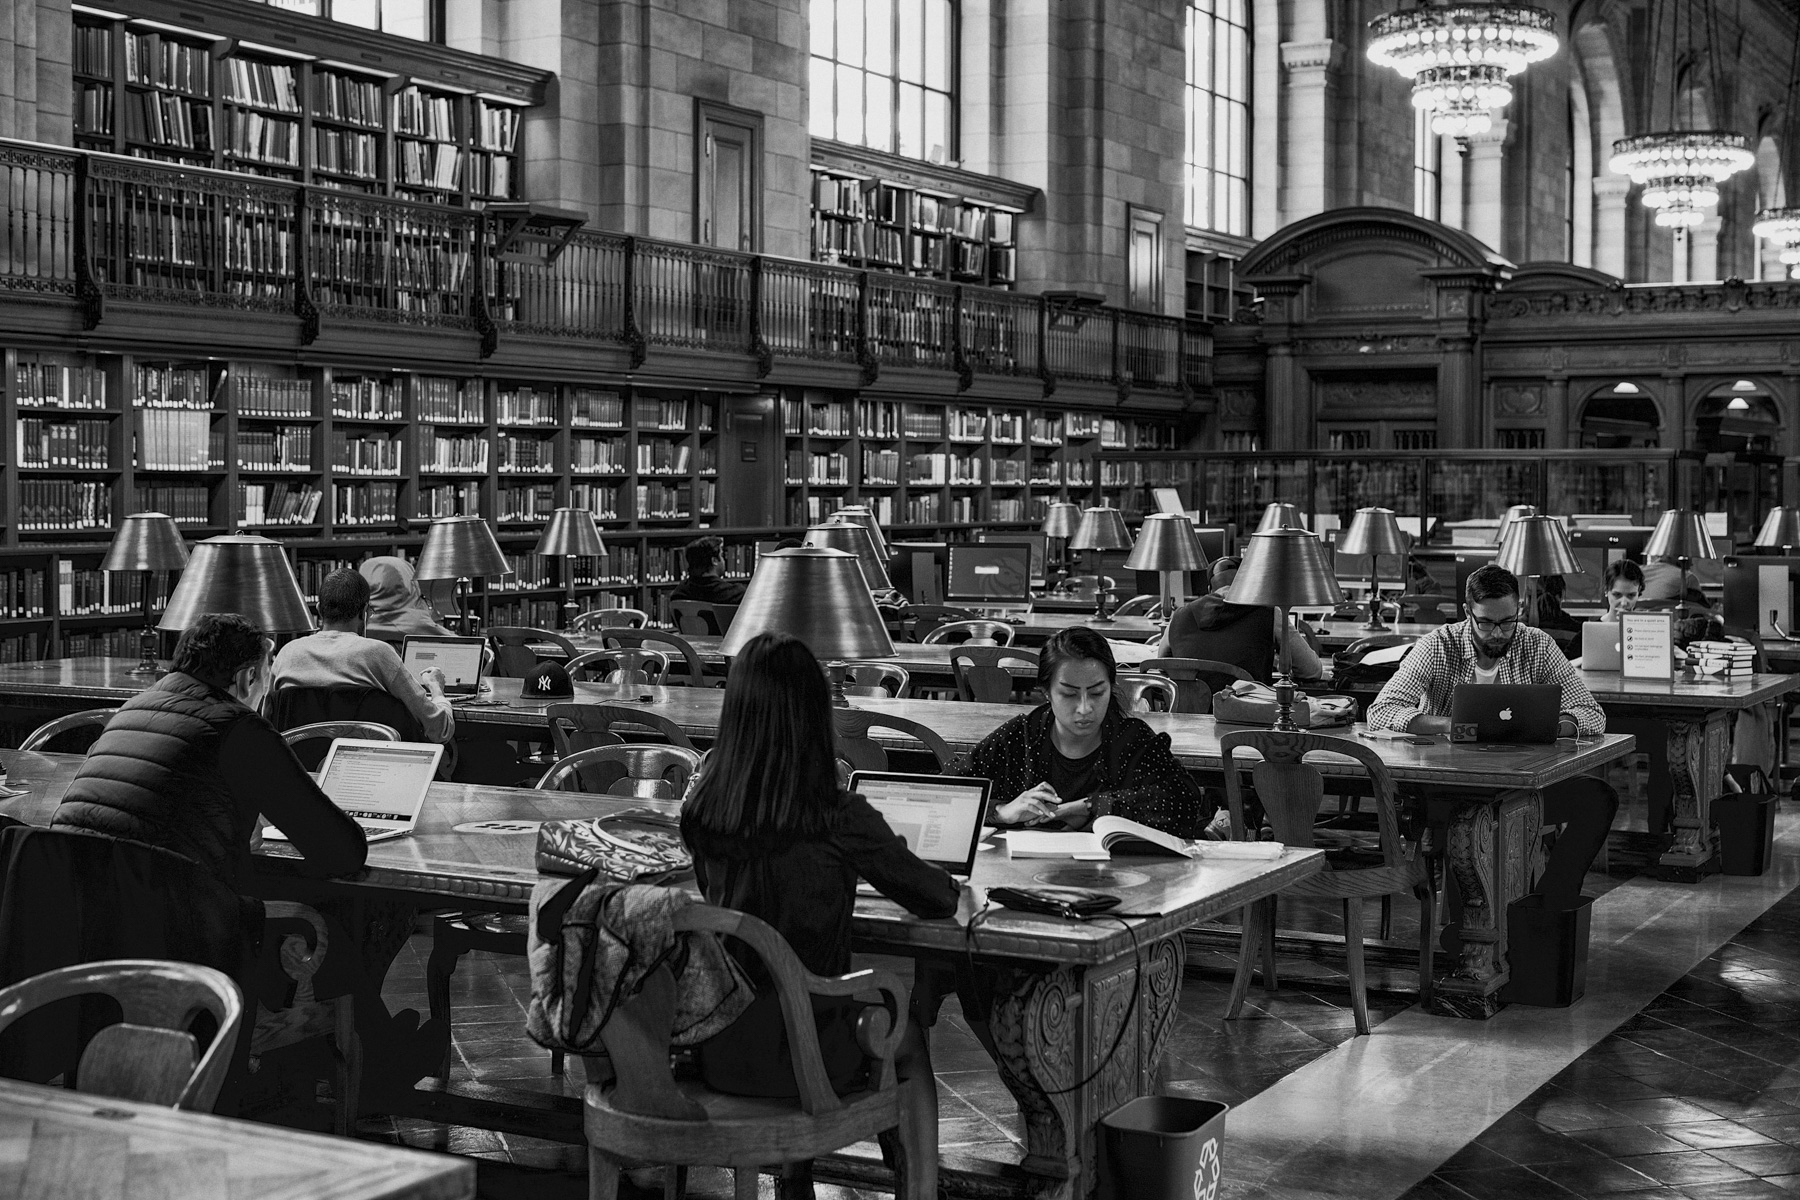 New York Public Library